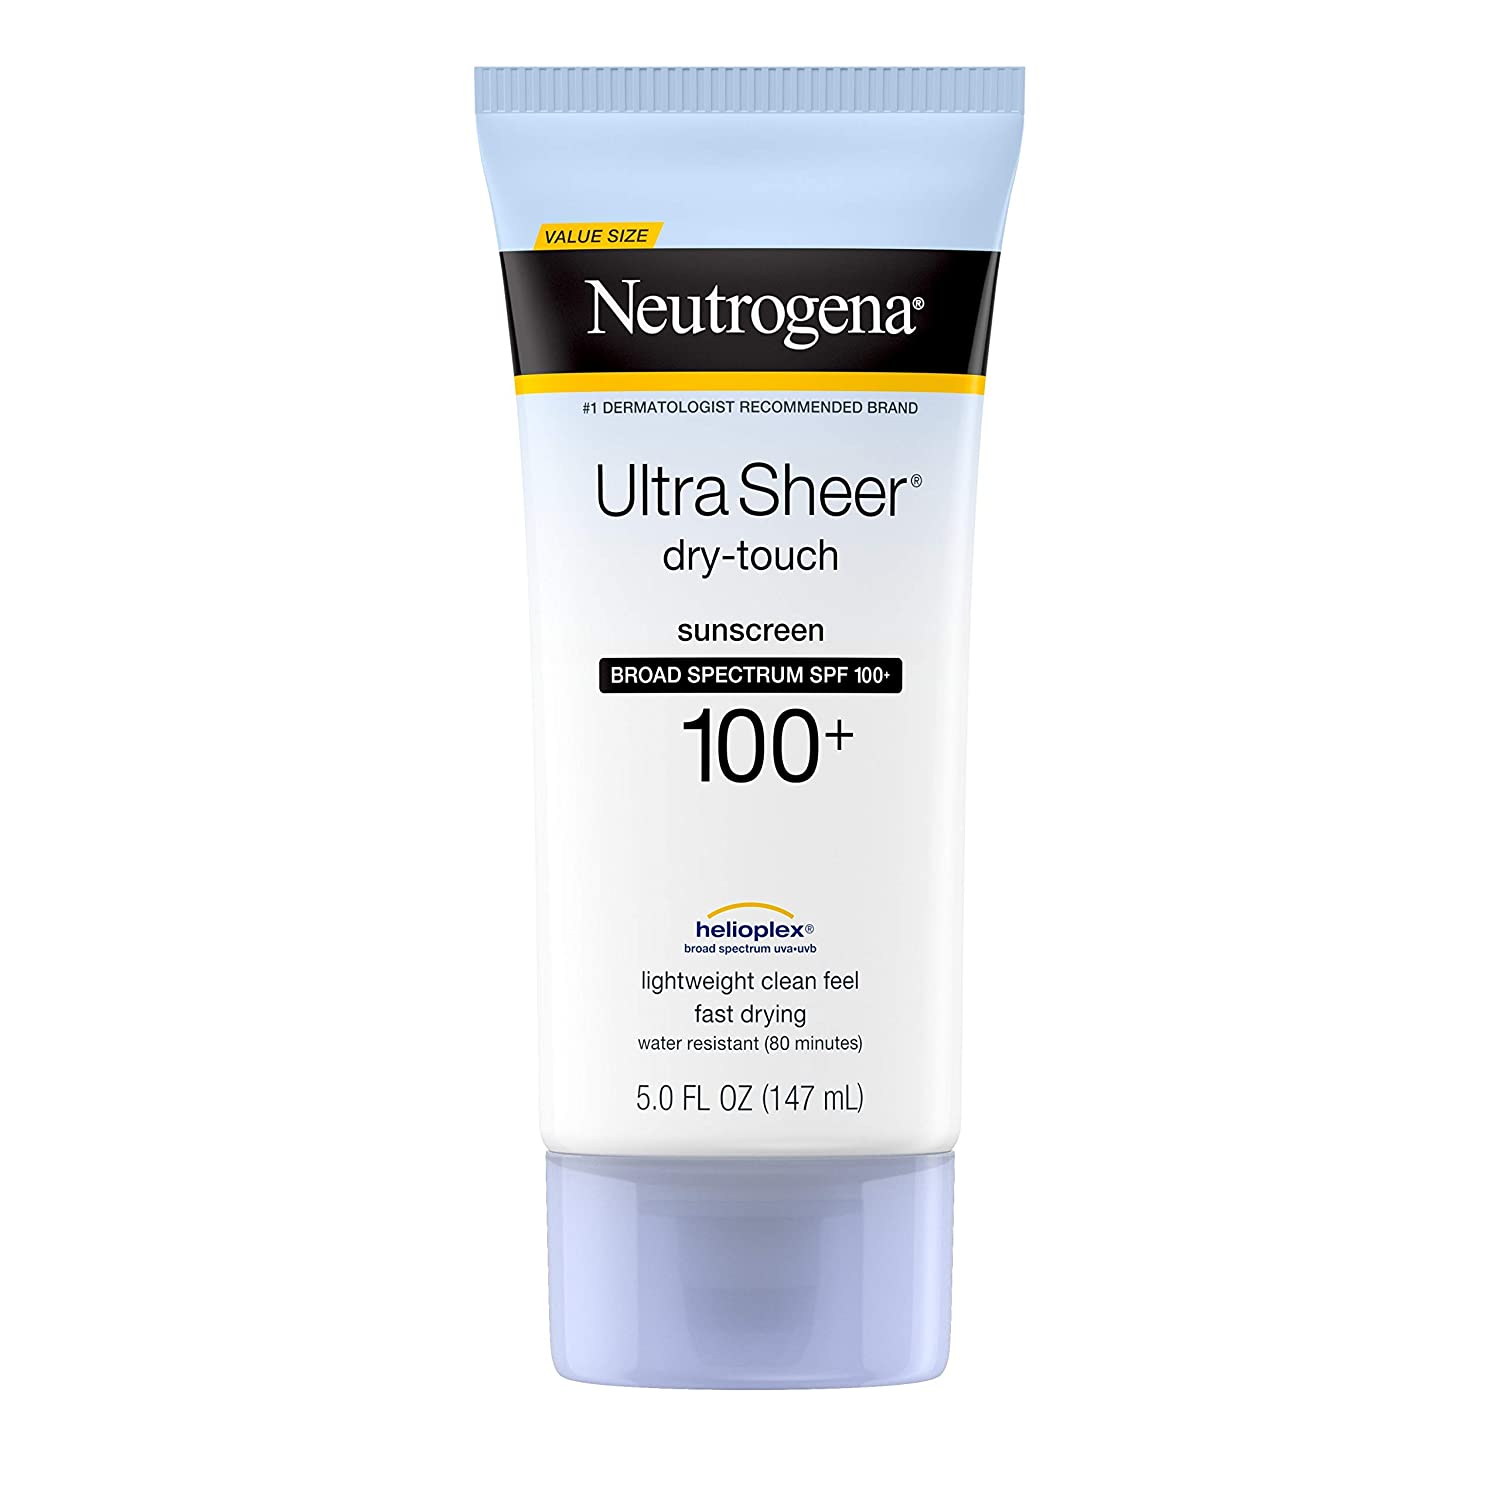 Neutrogena Ultrasheer Dry-Touch